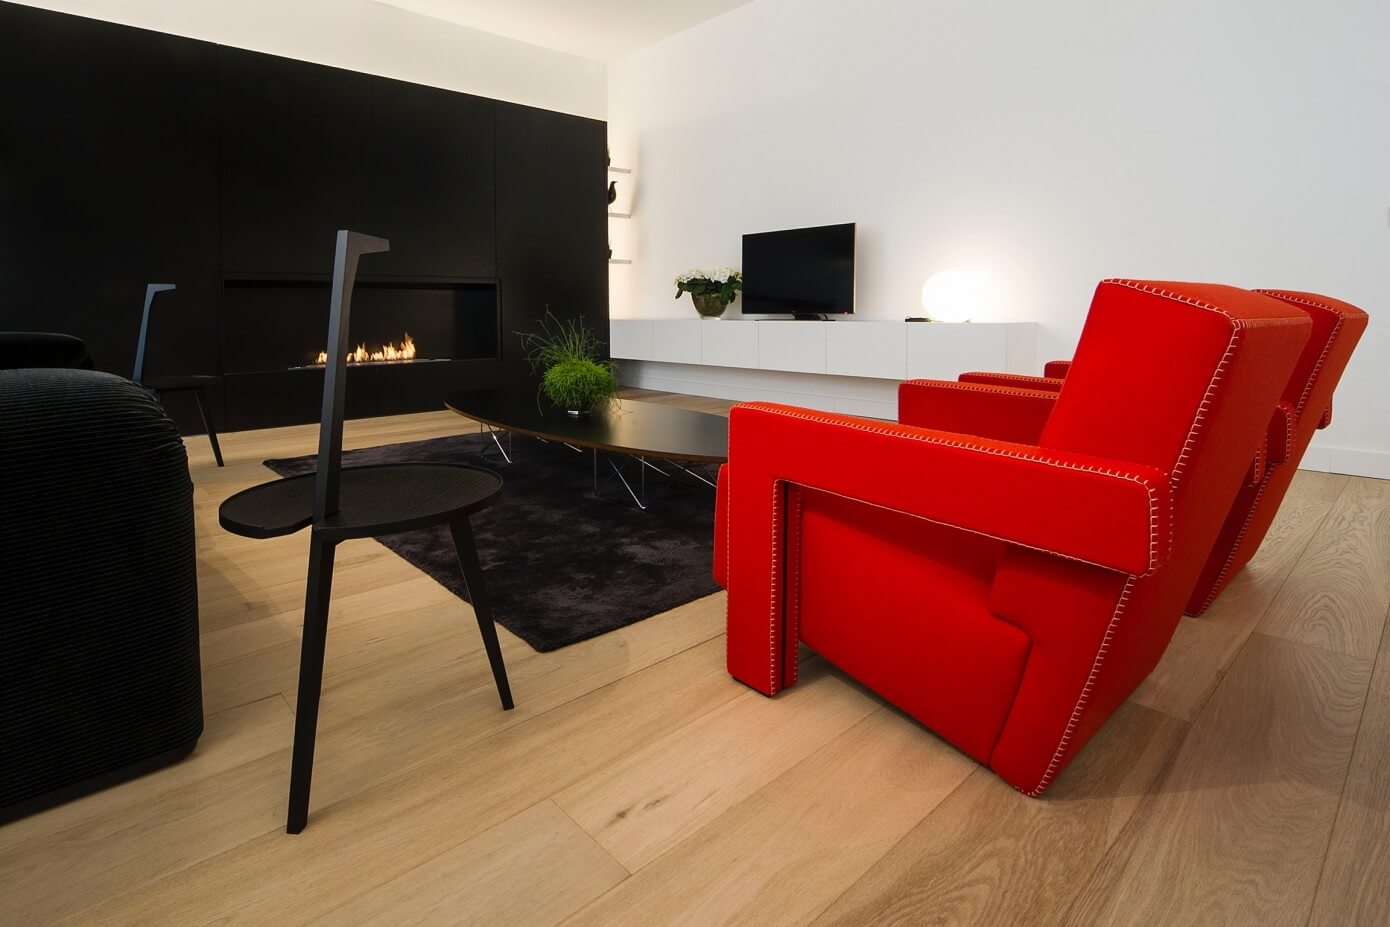 Apartment 1418 by Filip Deslee